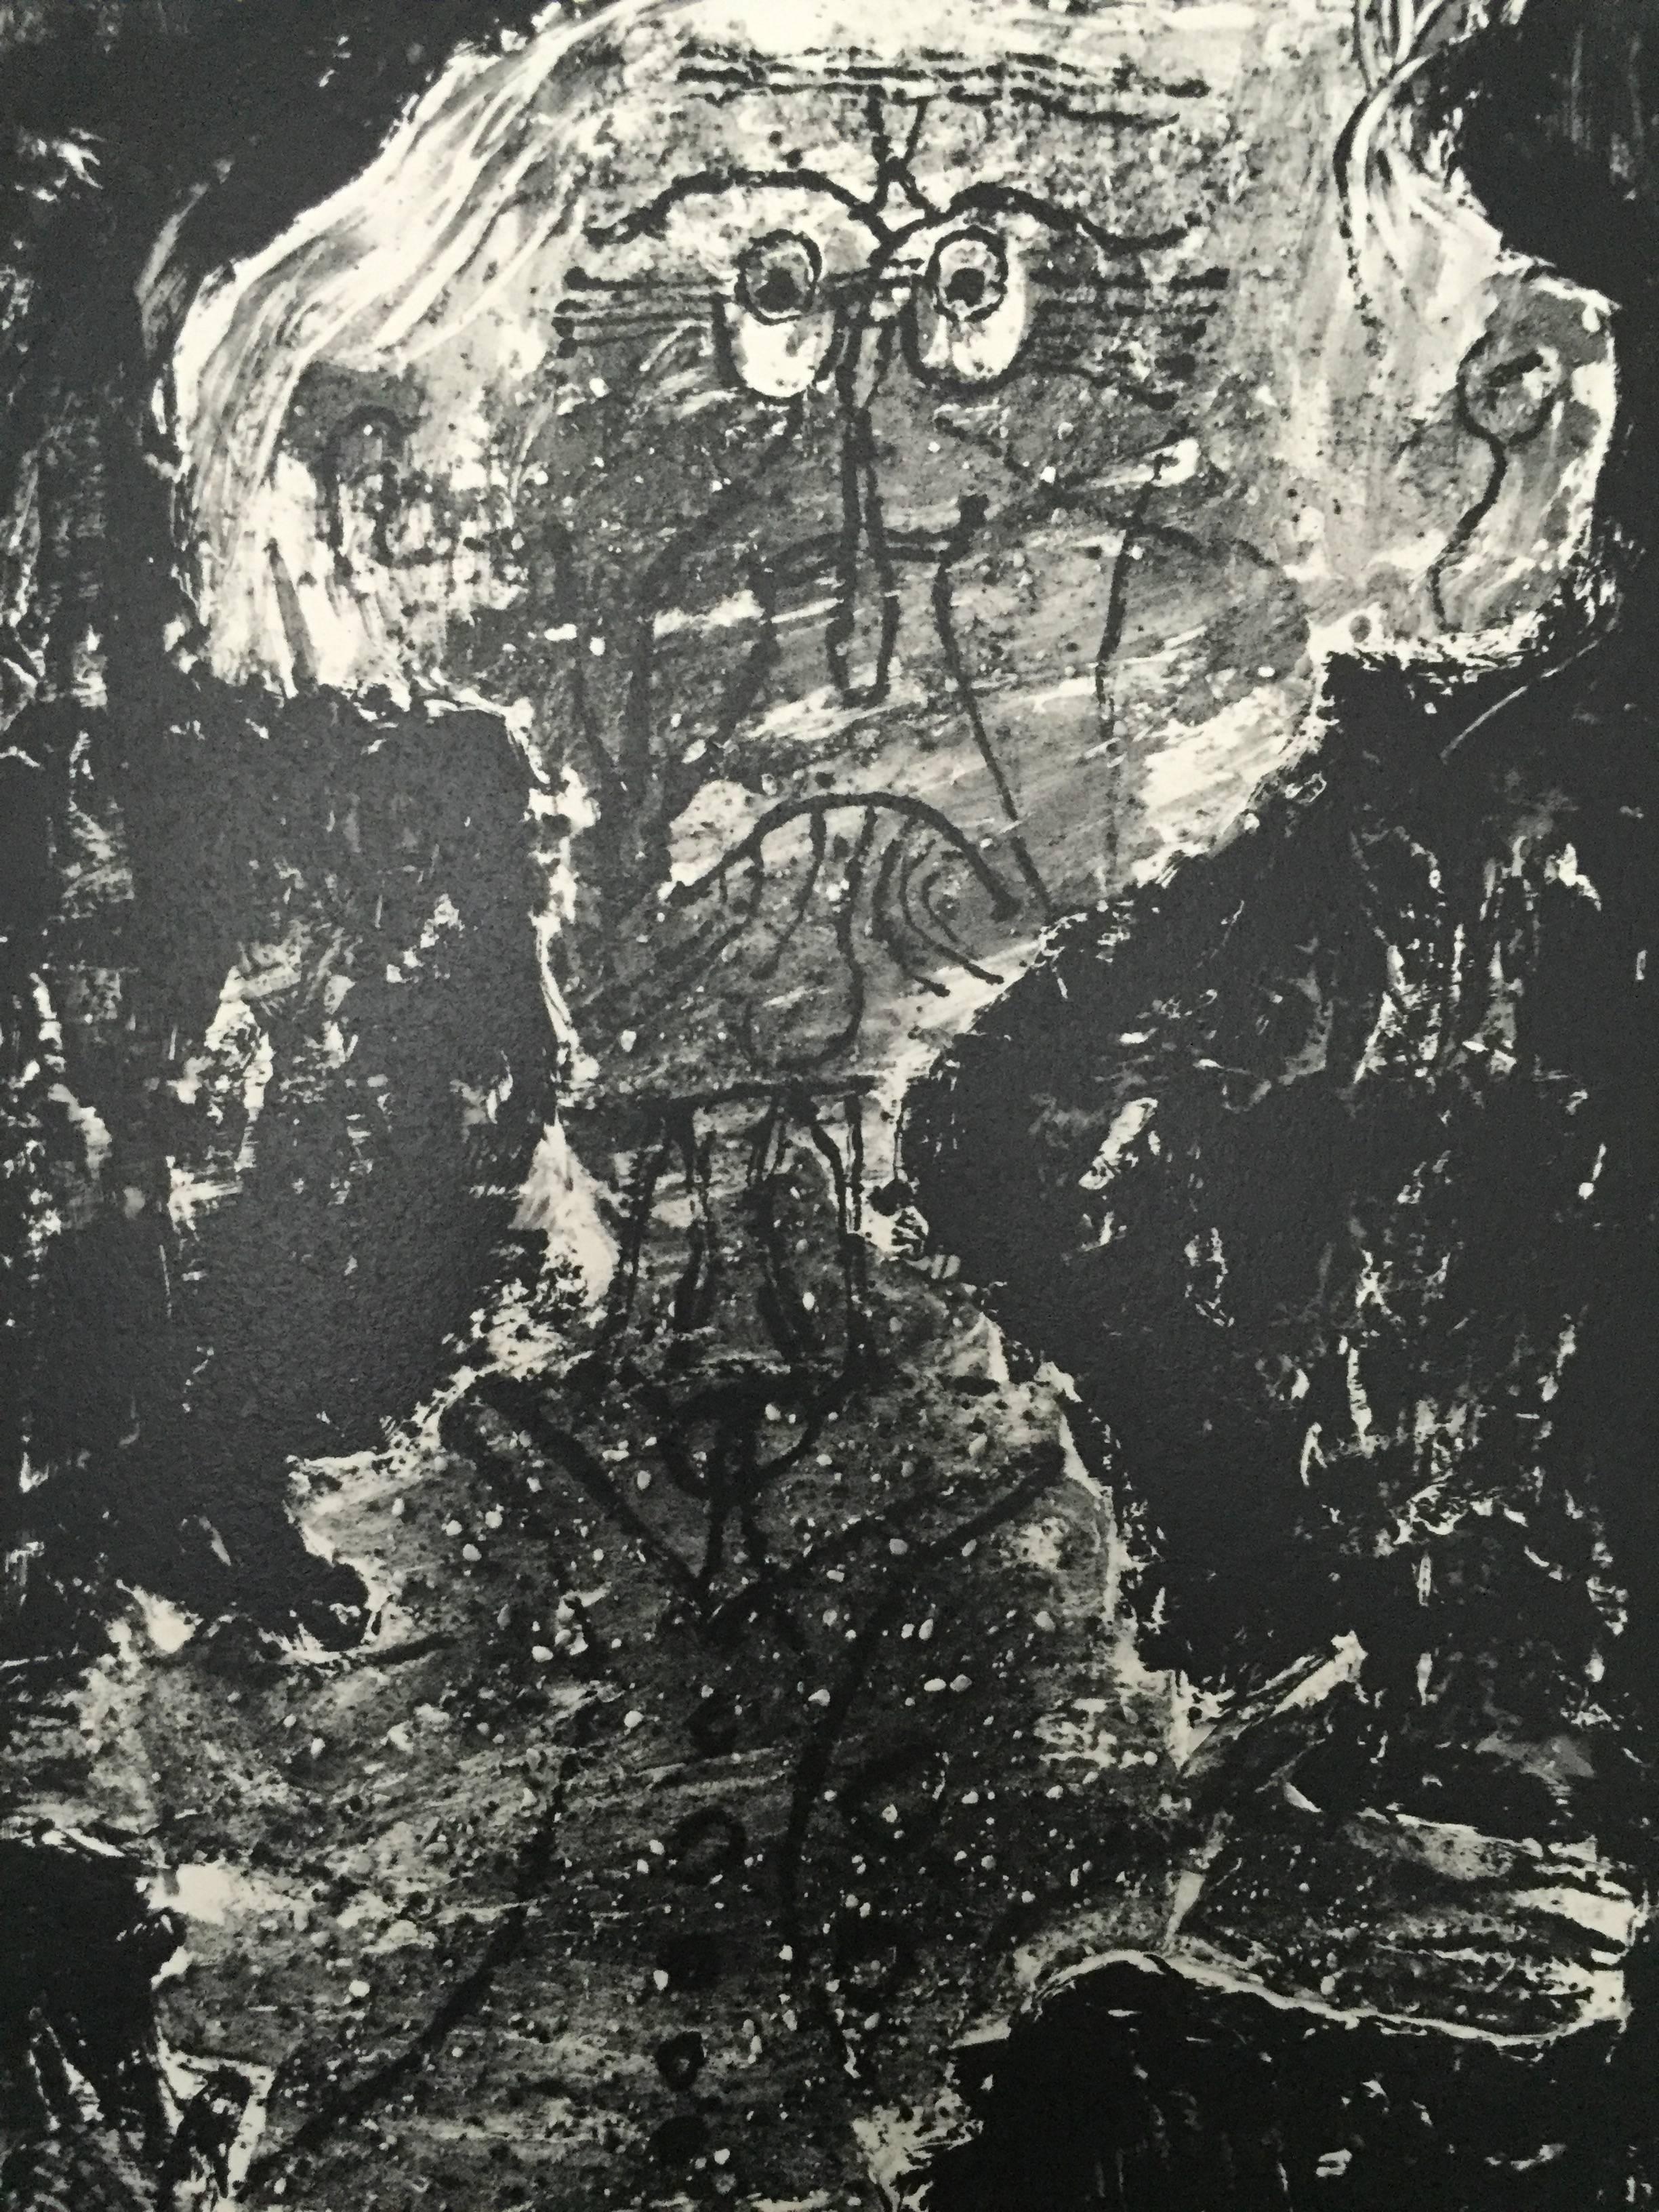 Mid-20th Century L'art Brut de Jean Dubuffet 1953